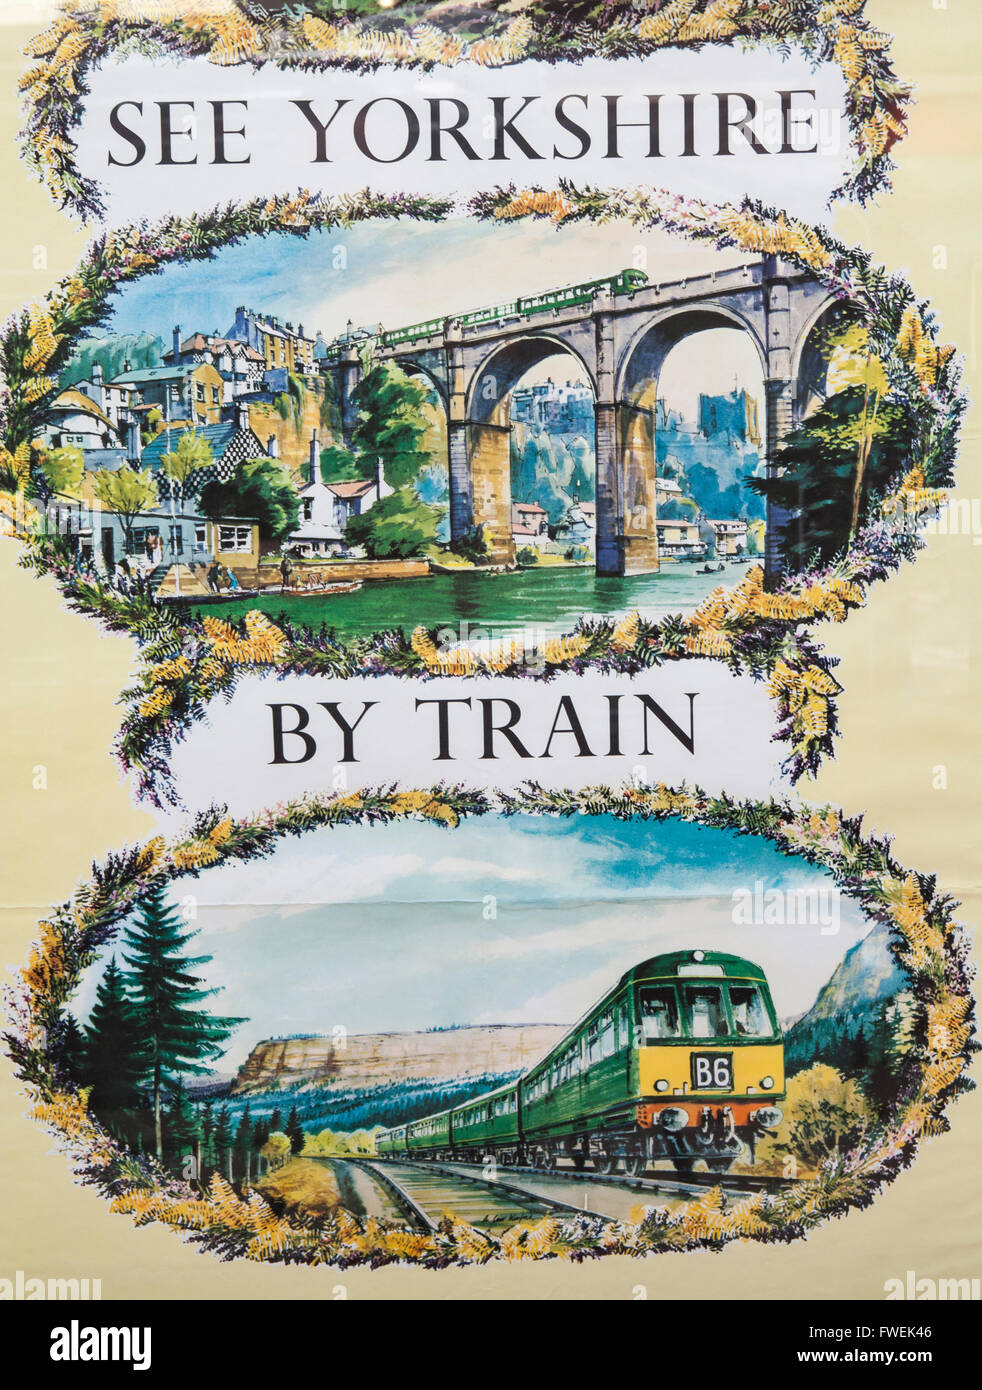 Vintage railway poster promoting Yorkshire, England, UK Stock Photo